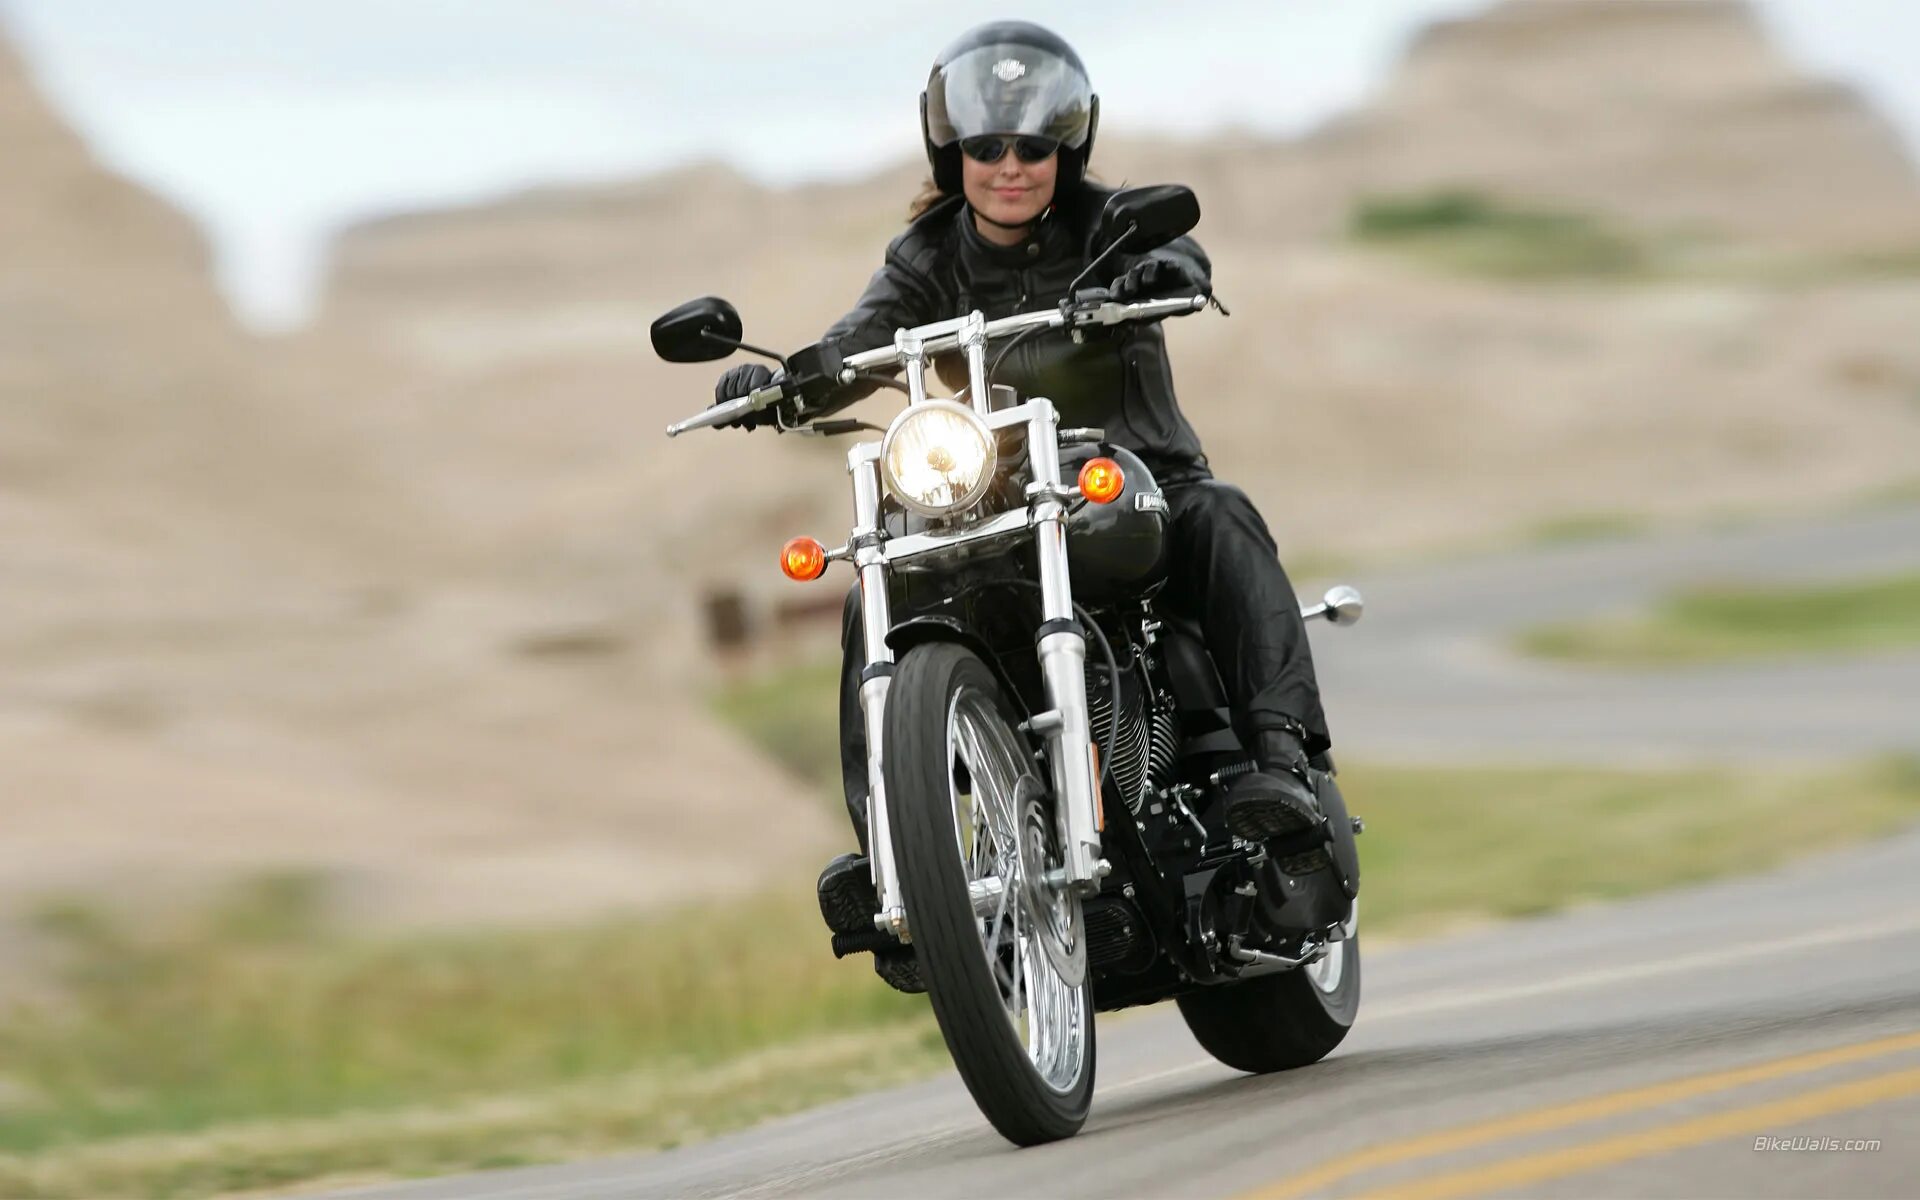 Harley Davidson 2006 Softail Heritage. Женский Харлей Дэвидсон мотоцикл. Харлей Дэвидсон чоппер езда. Девушка на мотоцикле. Фото на байке